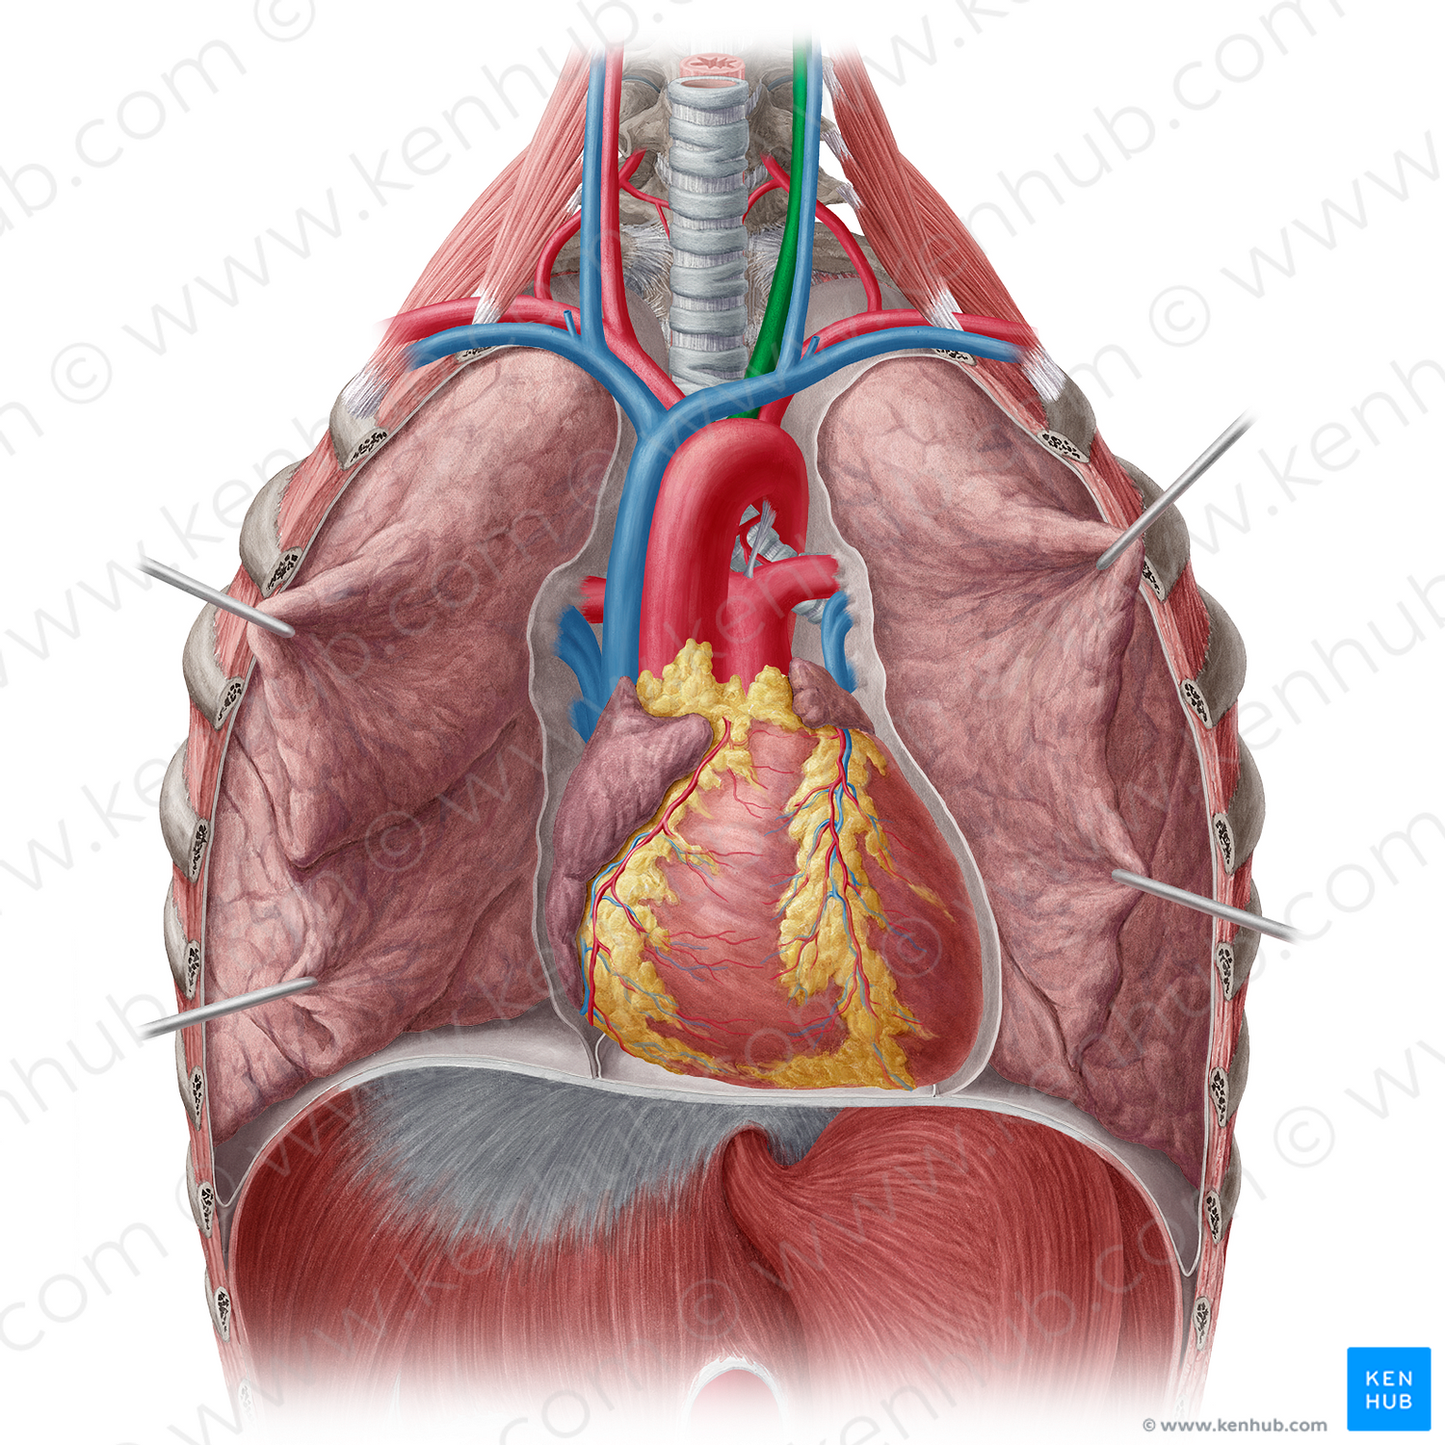 Left common carotid artery (#943)